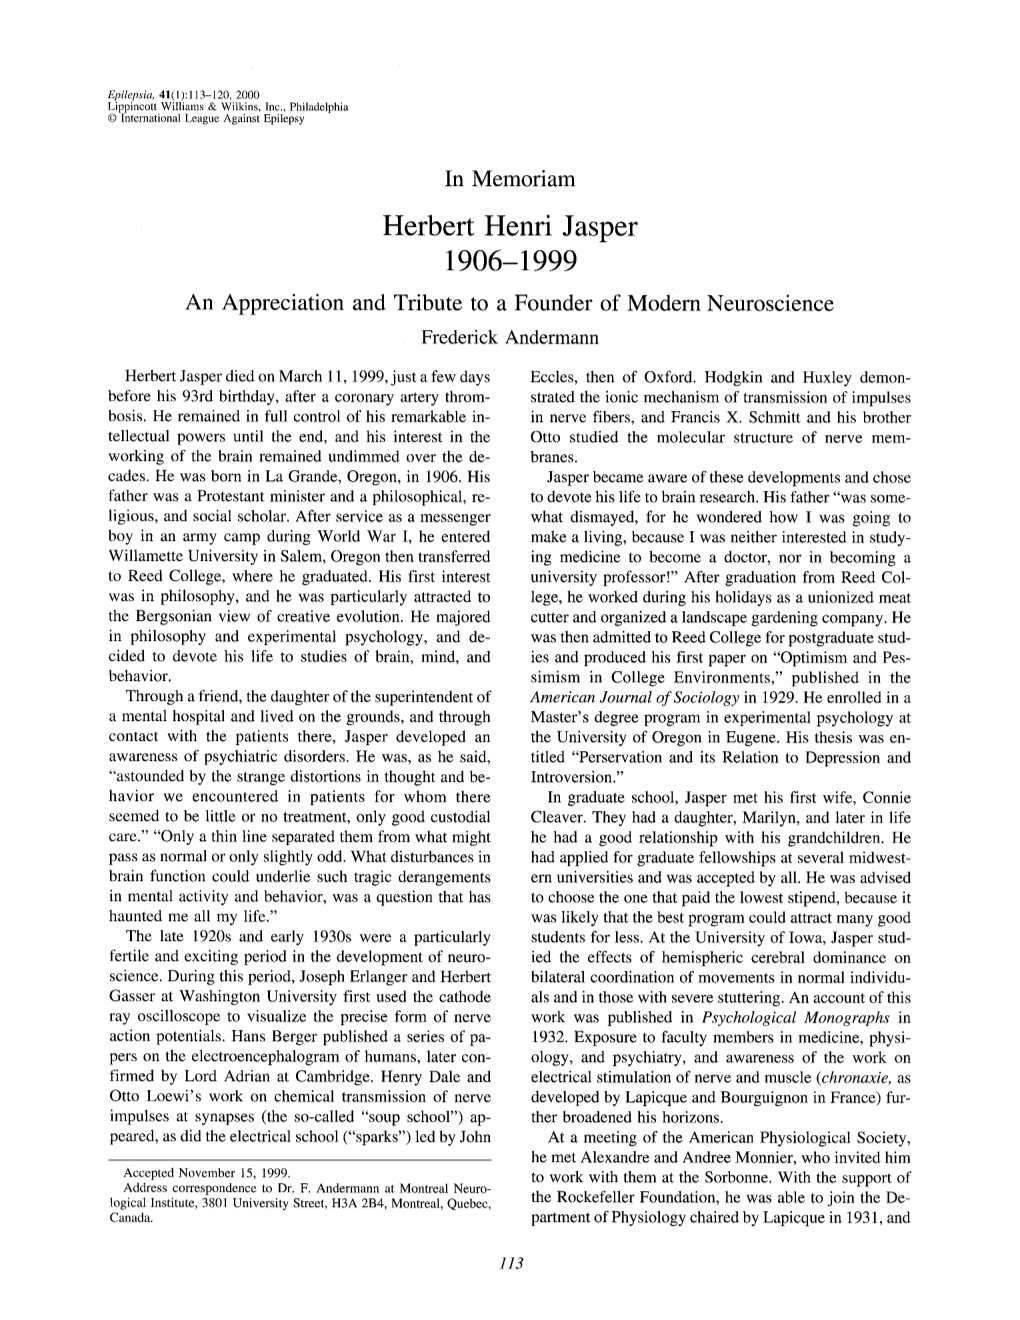 Herbert Henri Jasper 1906-1999 an Appreciation and Tribute to a Founder of Modern Neuroscience Frederick Andermann